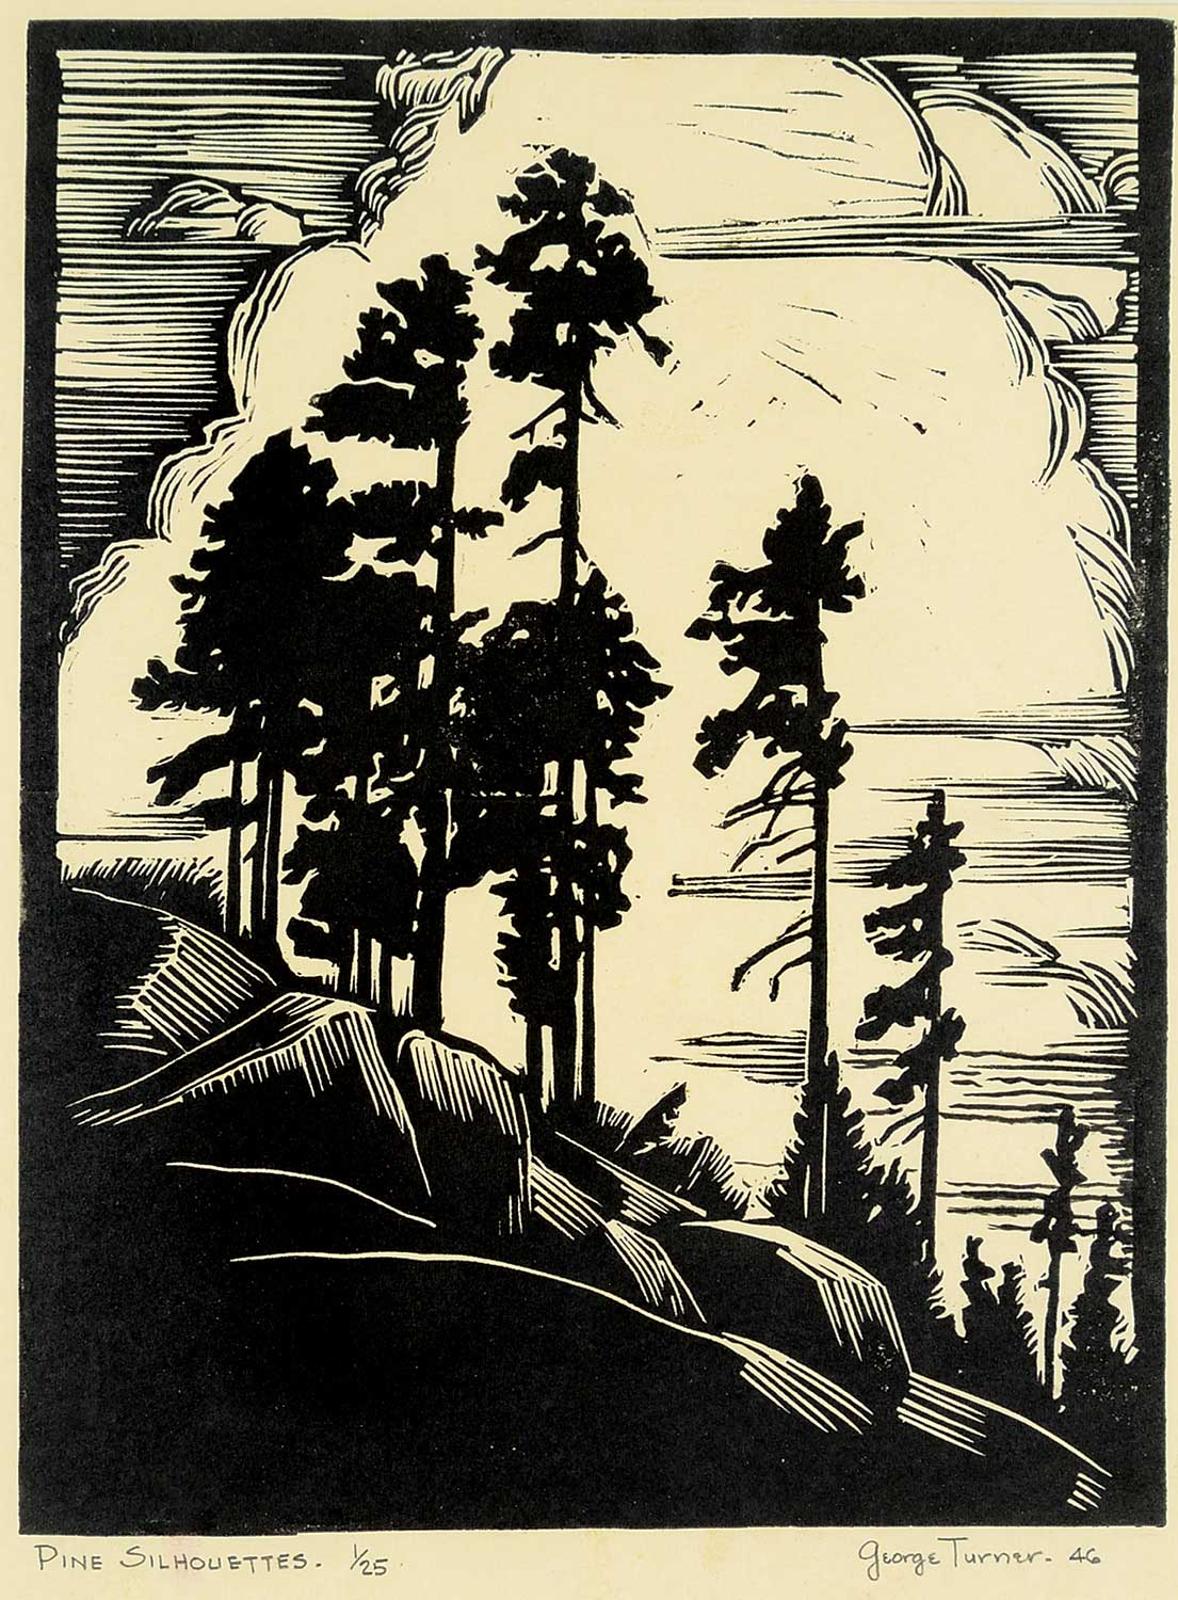 George Turner (1843-1910) - Pine Silhouettes  #1/25